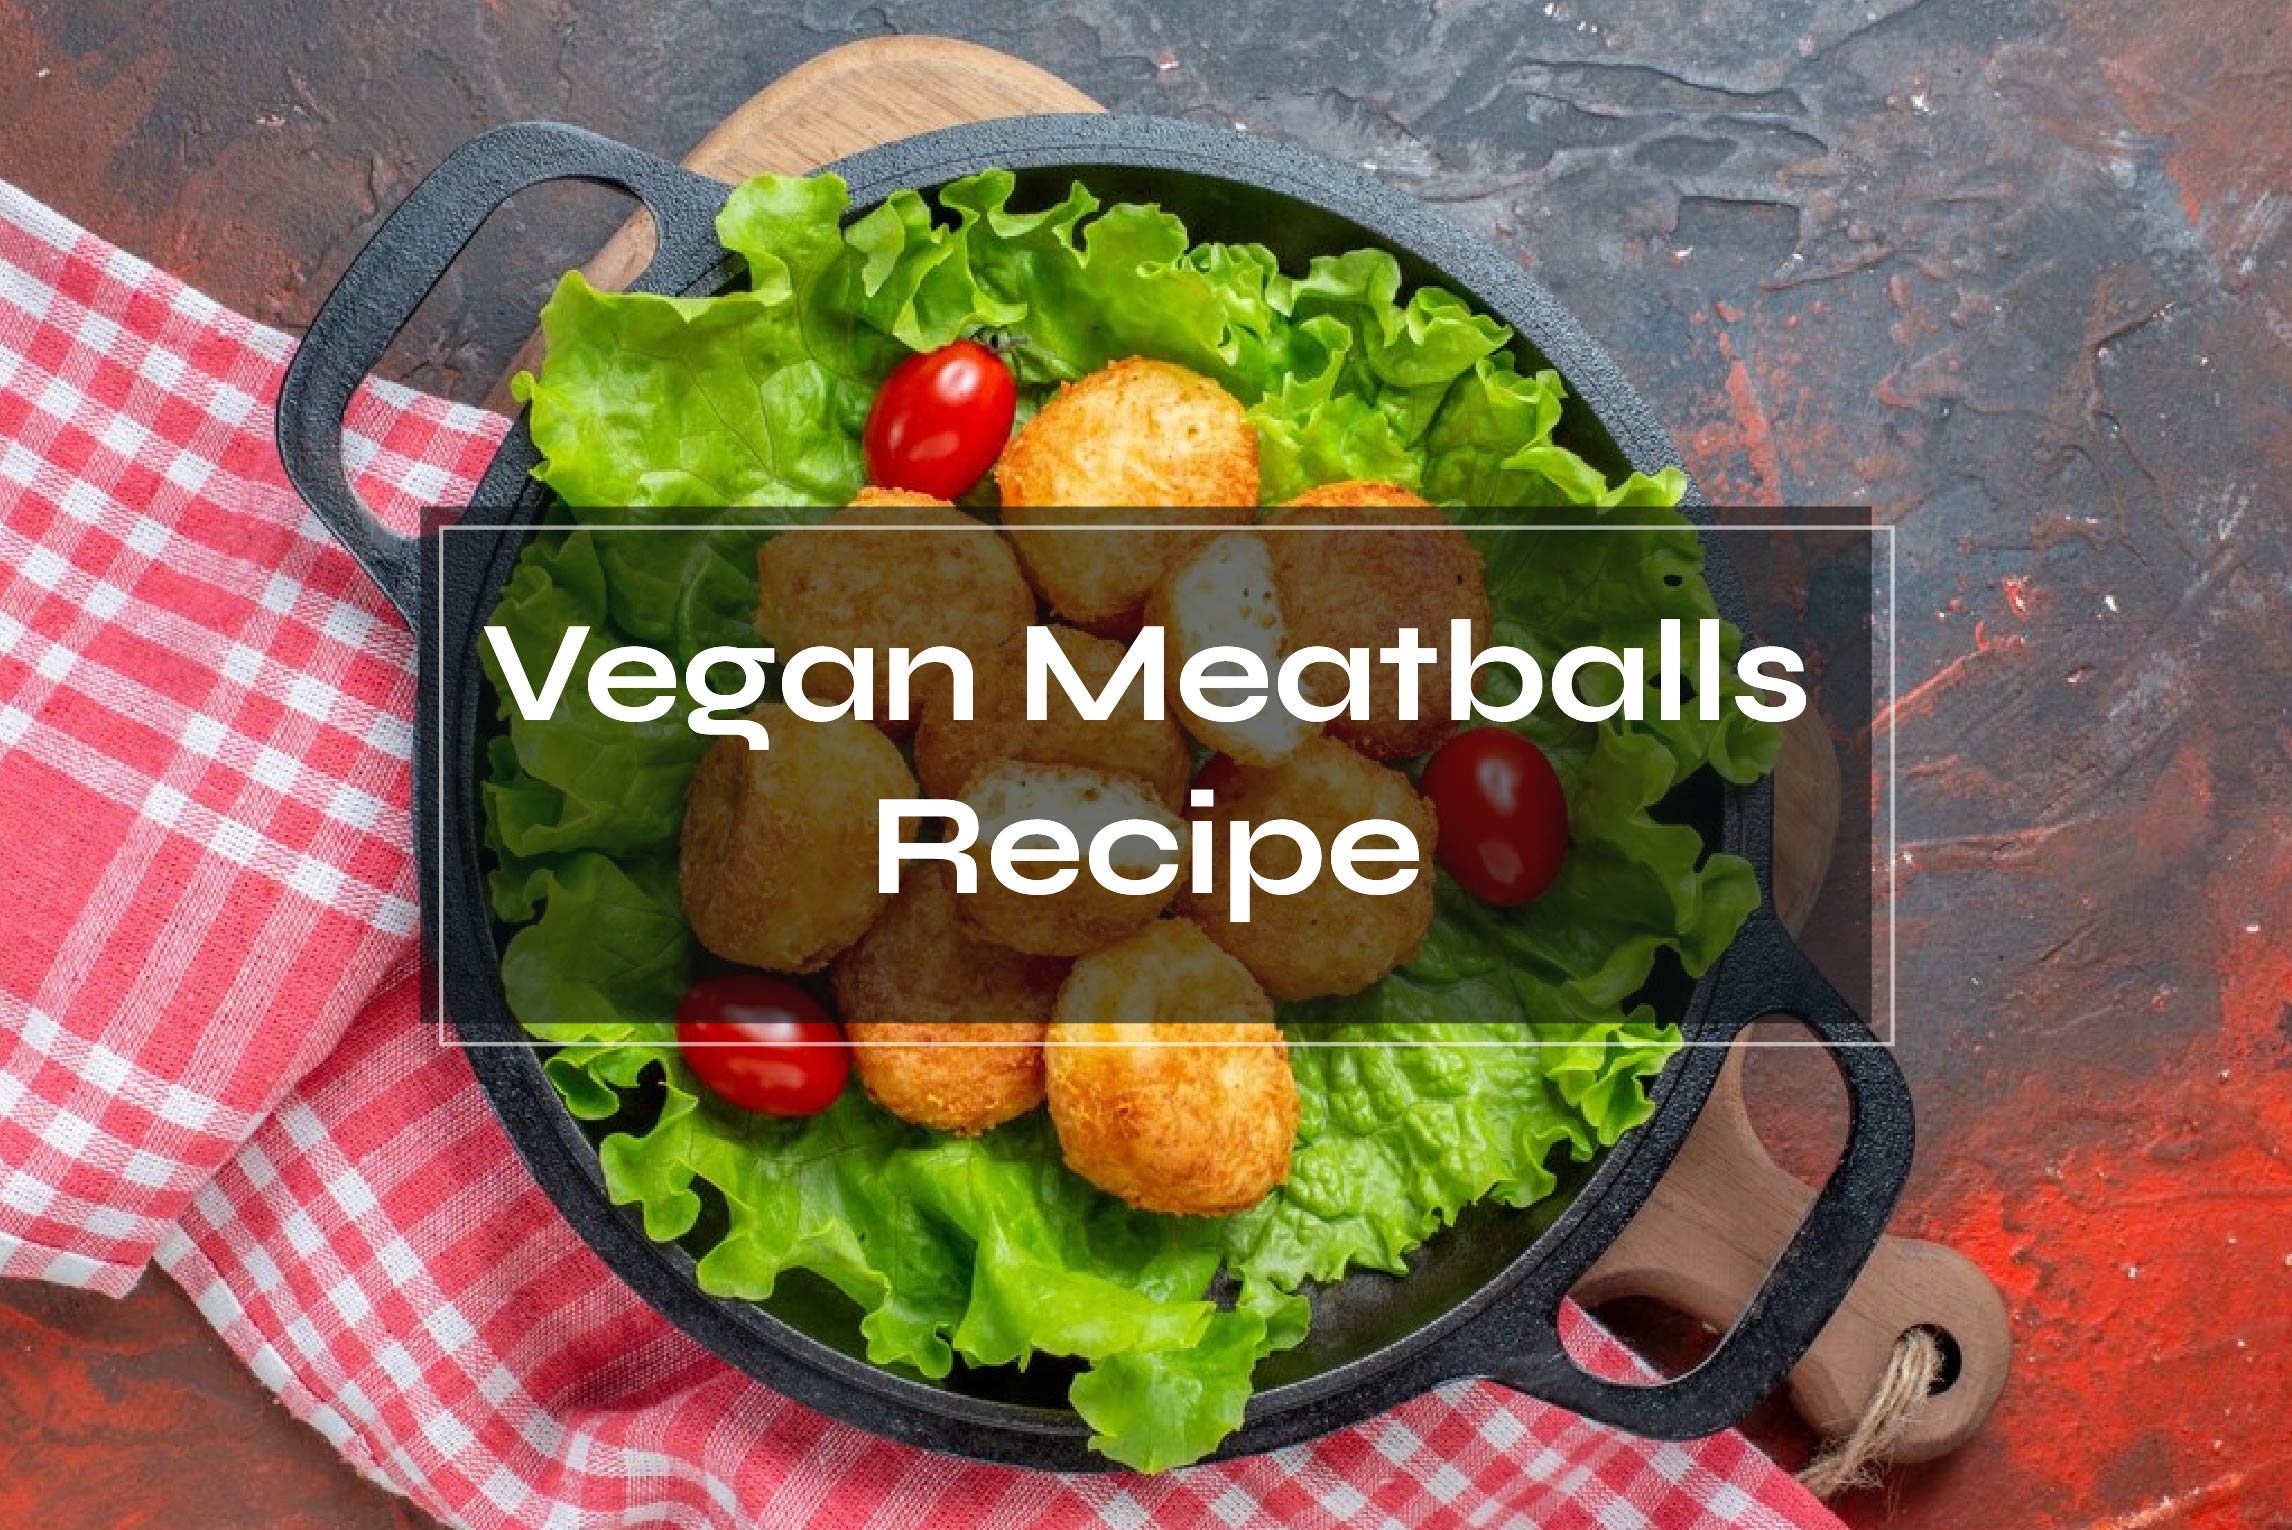 Vegan Meatballs Recipe